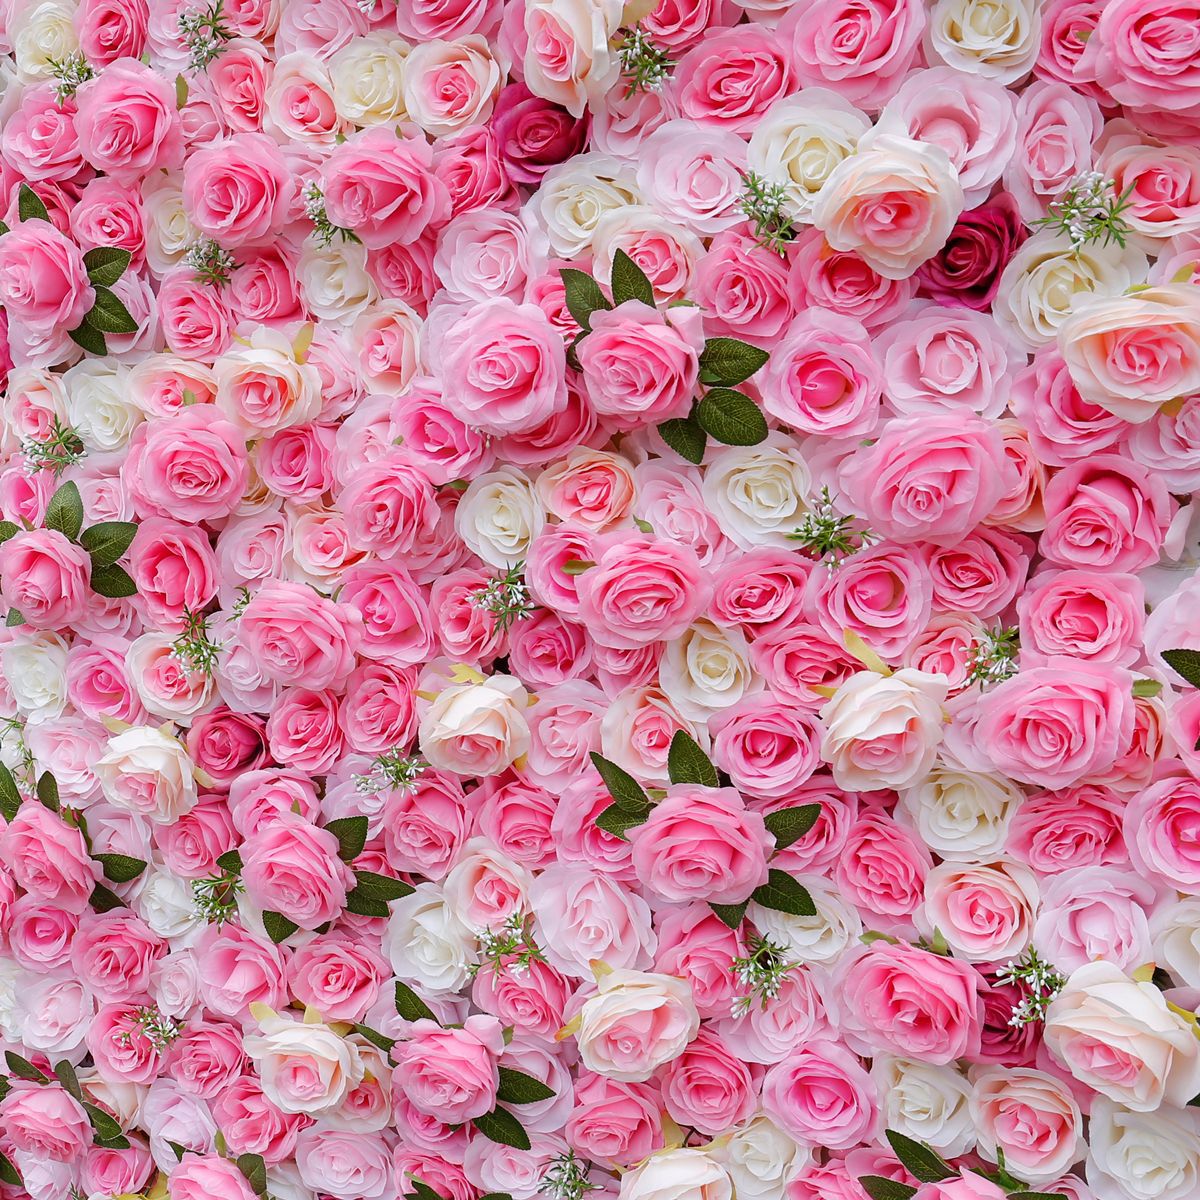 Woz twal simulation bounda bough @ branch flè miray maryaj art floral rose miray